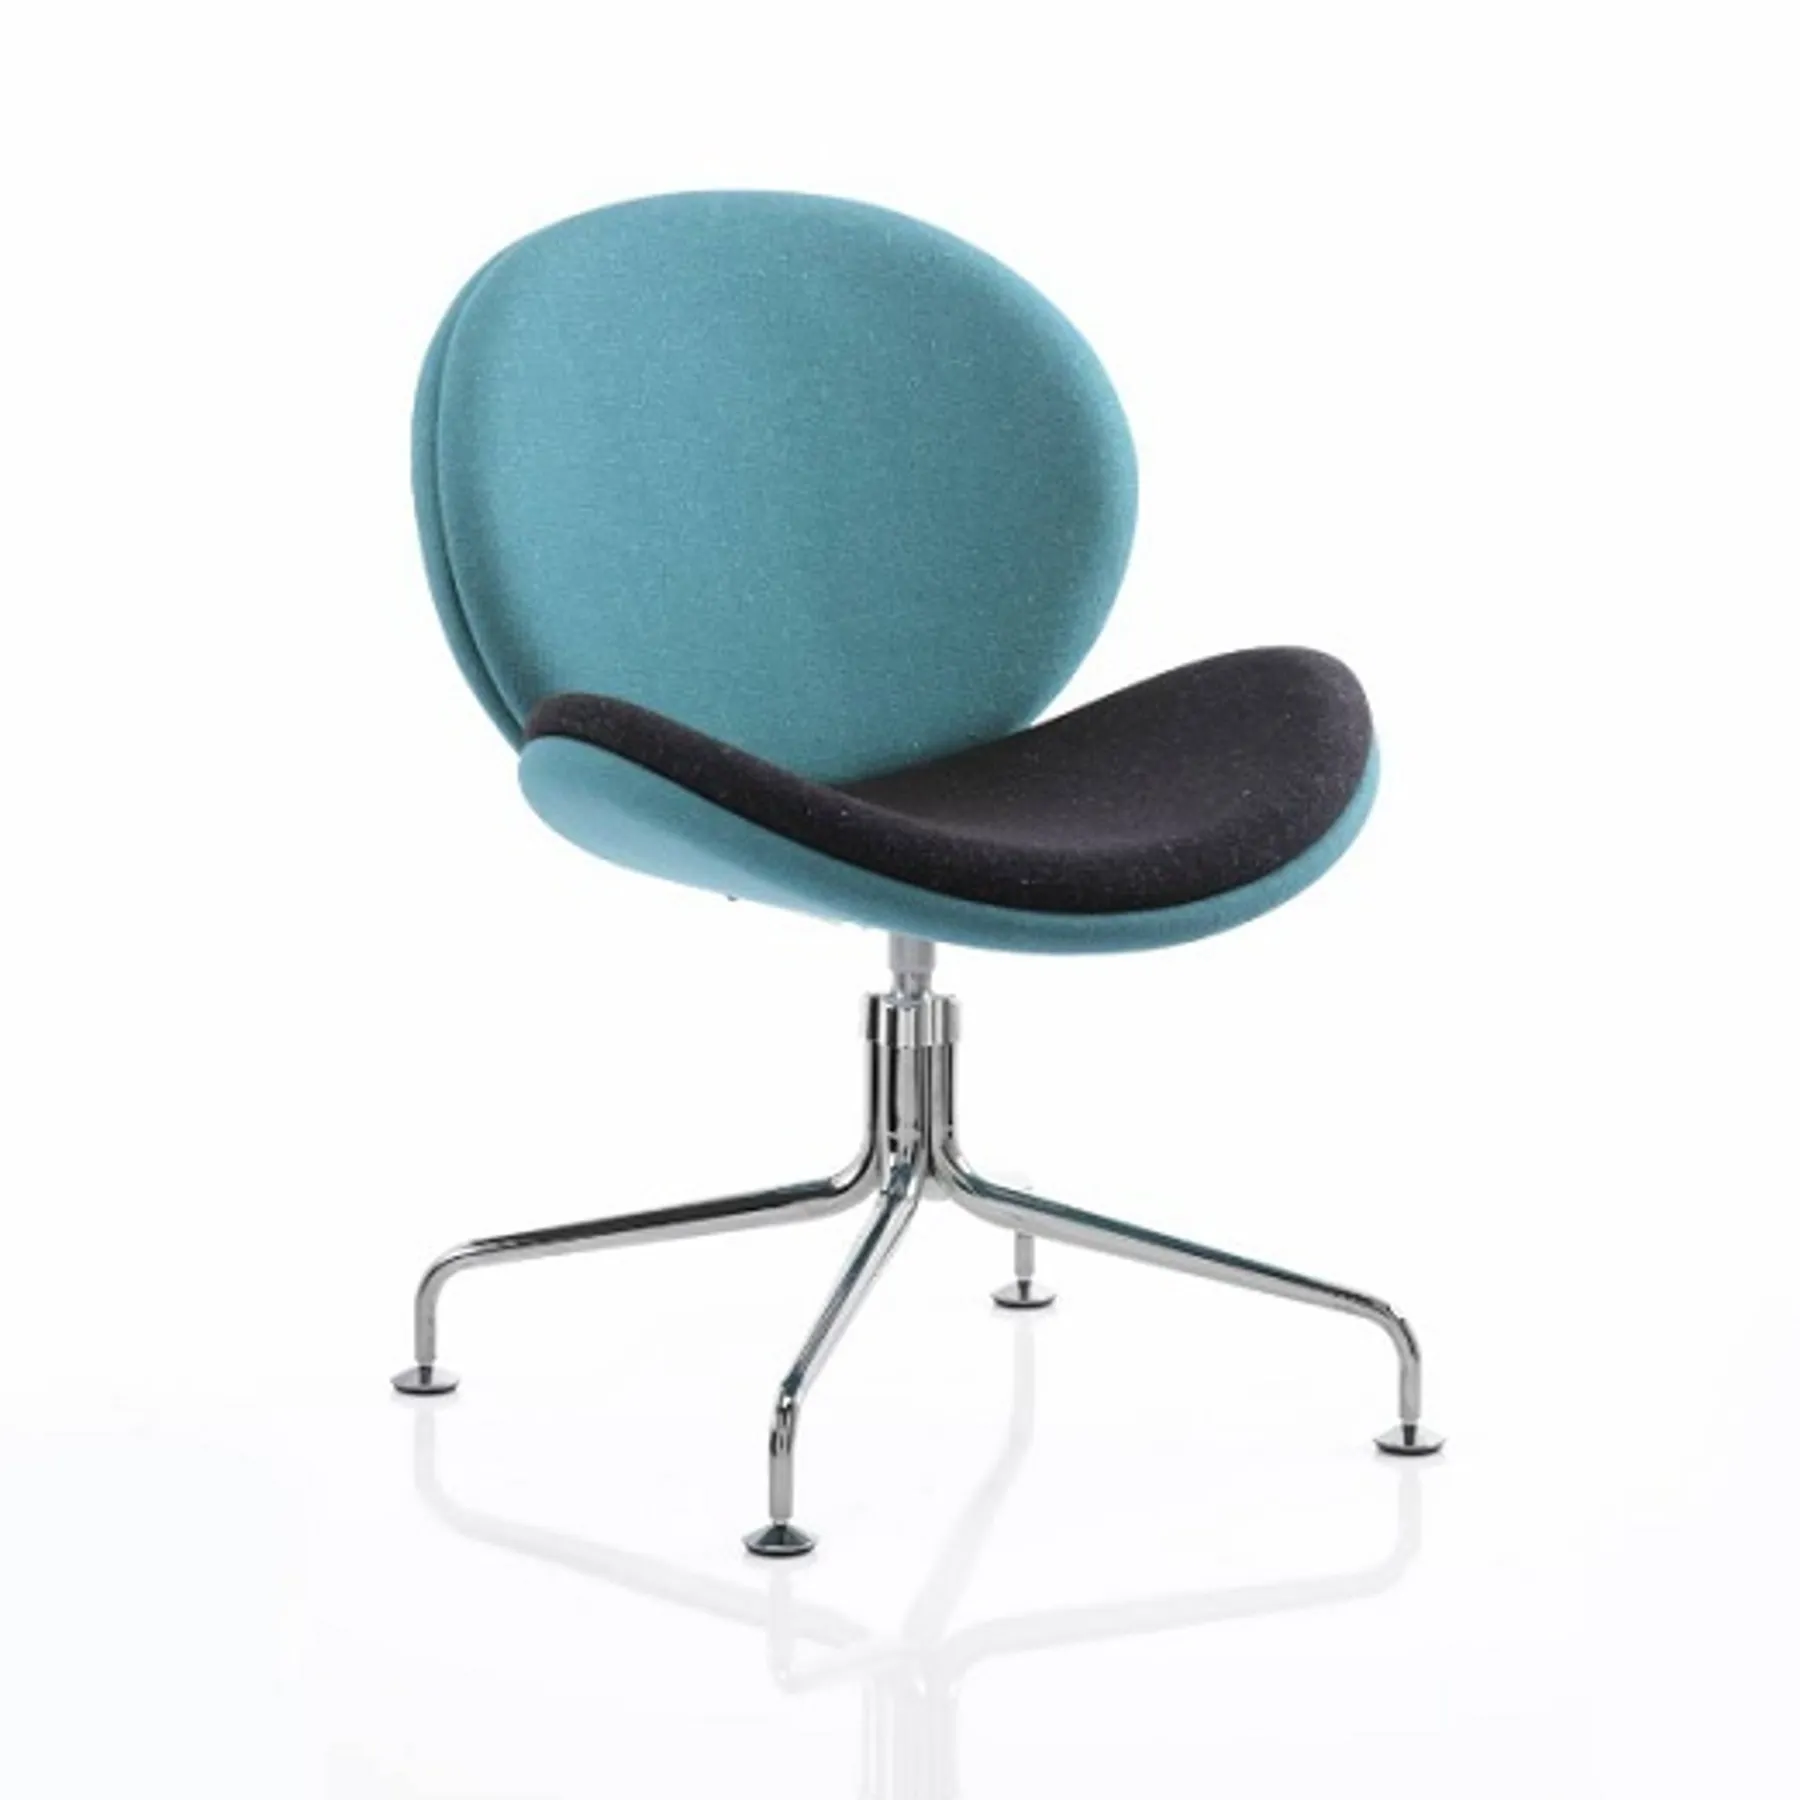 Lof Direct Giggle Chair ocee design giggle3 side alternative fabrics